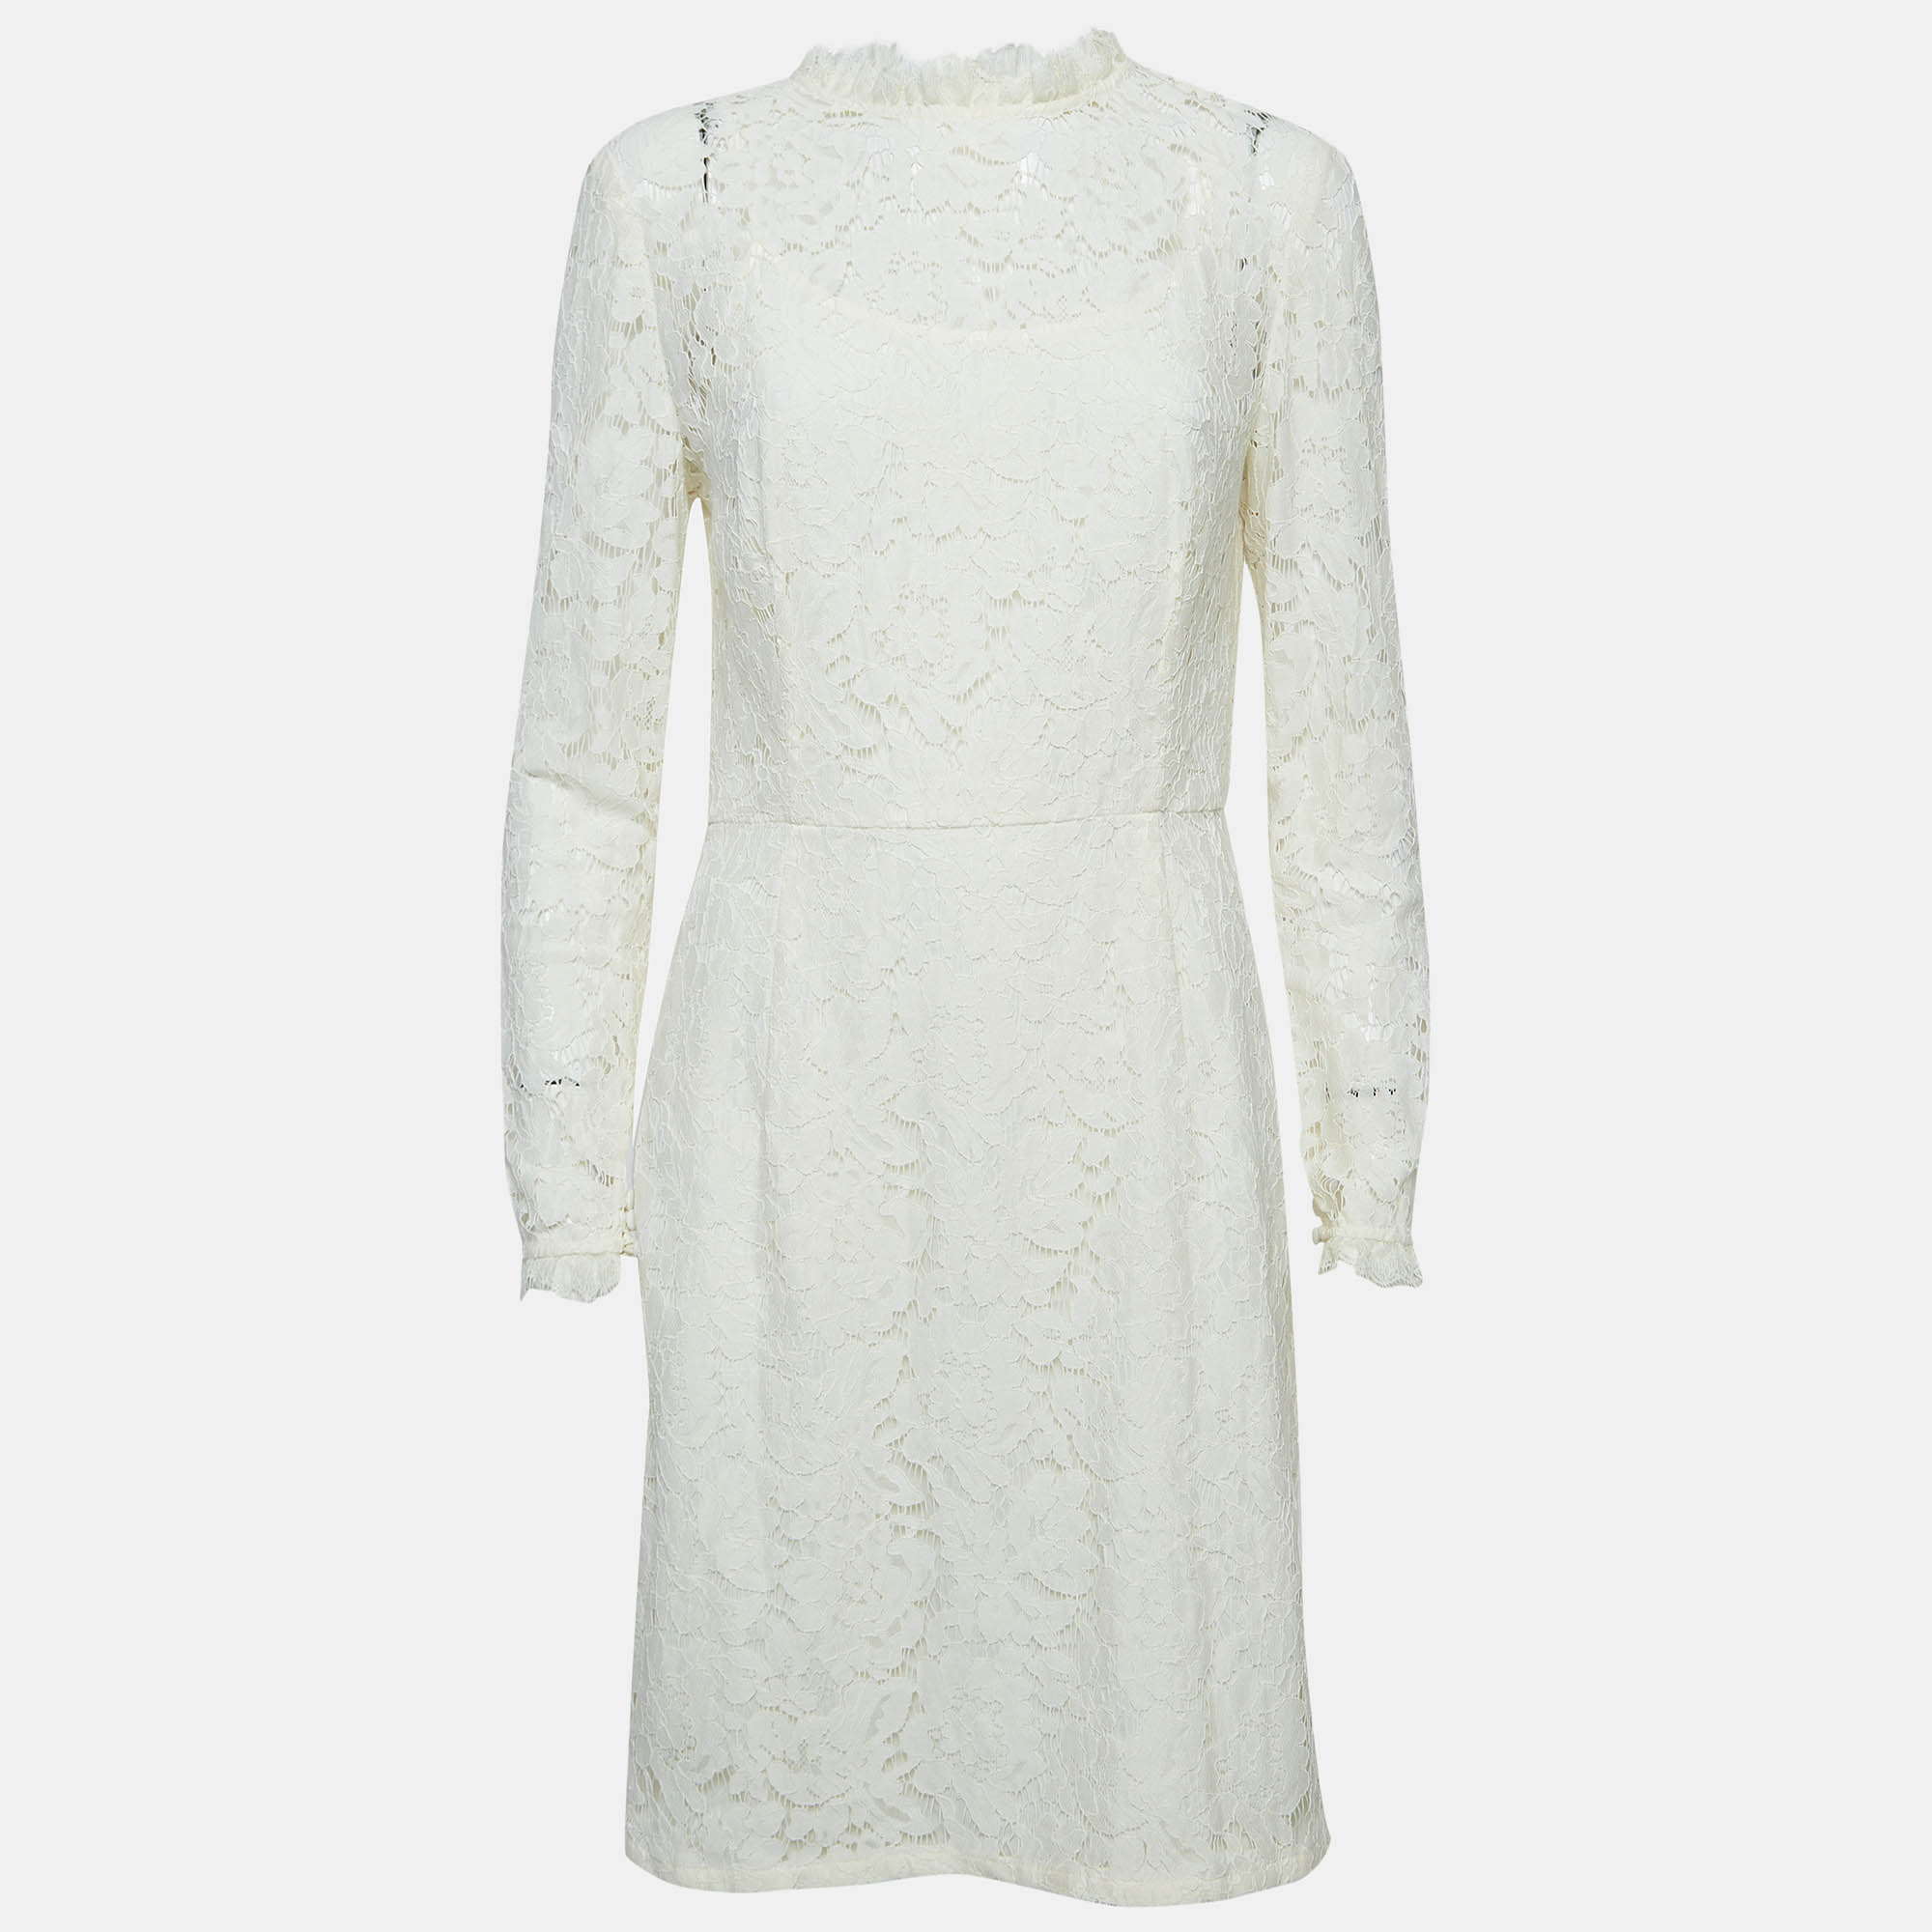 Temperly london off-white floral lace cut-out short dress l